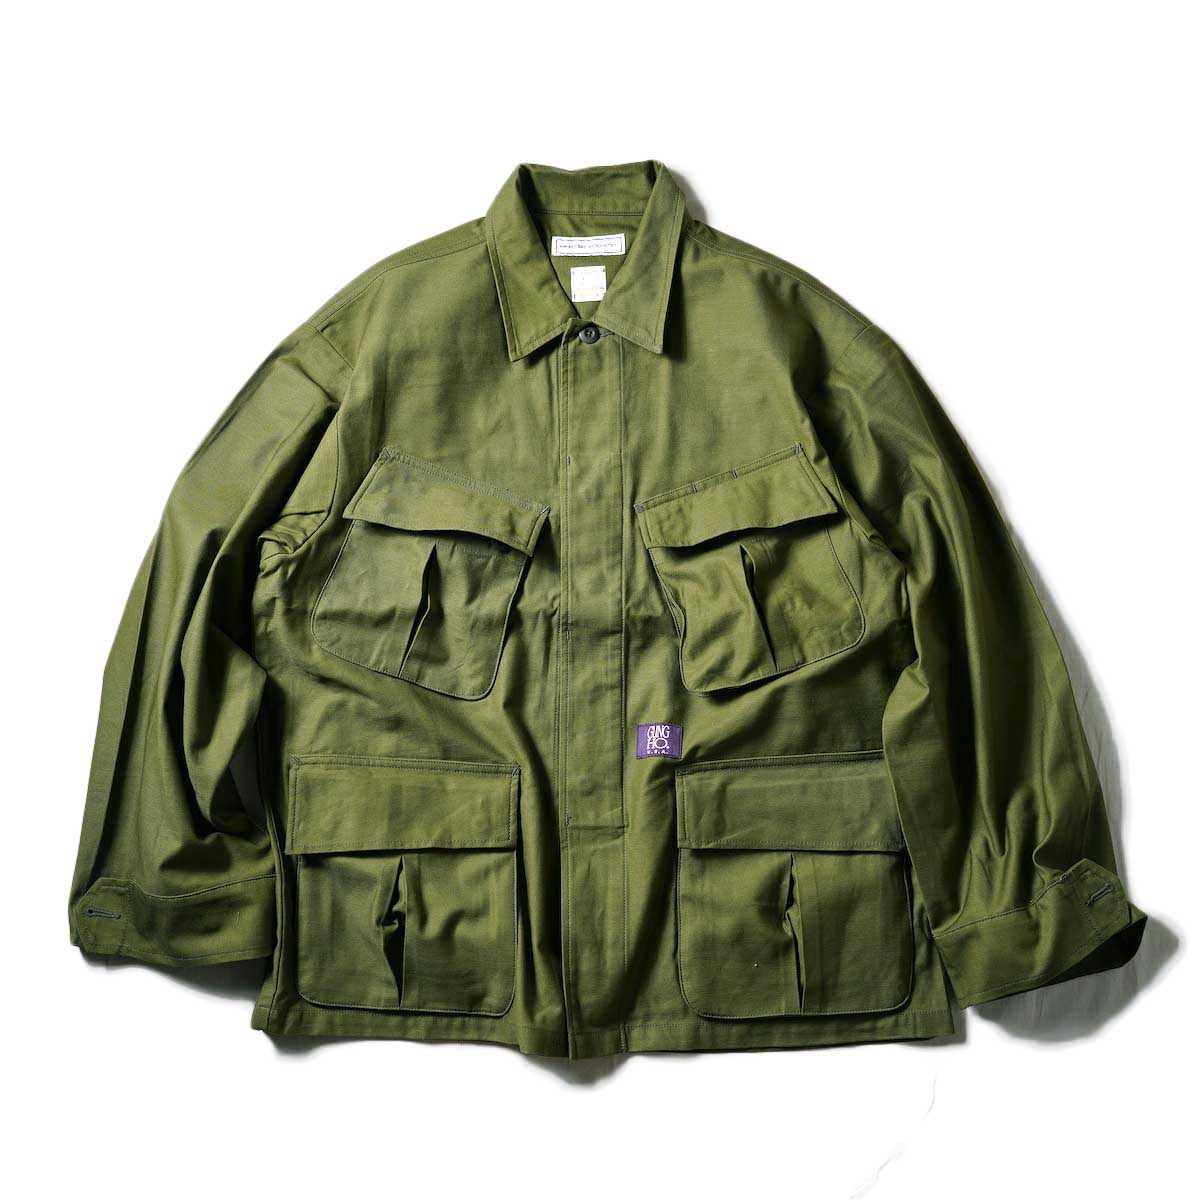 UNIVERSAL PRODUCTS / Gung Ho Fatigue Jacket (Olive)